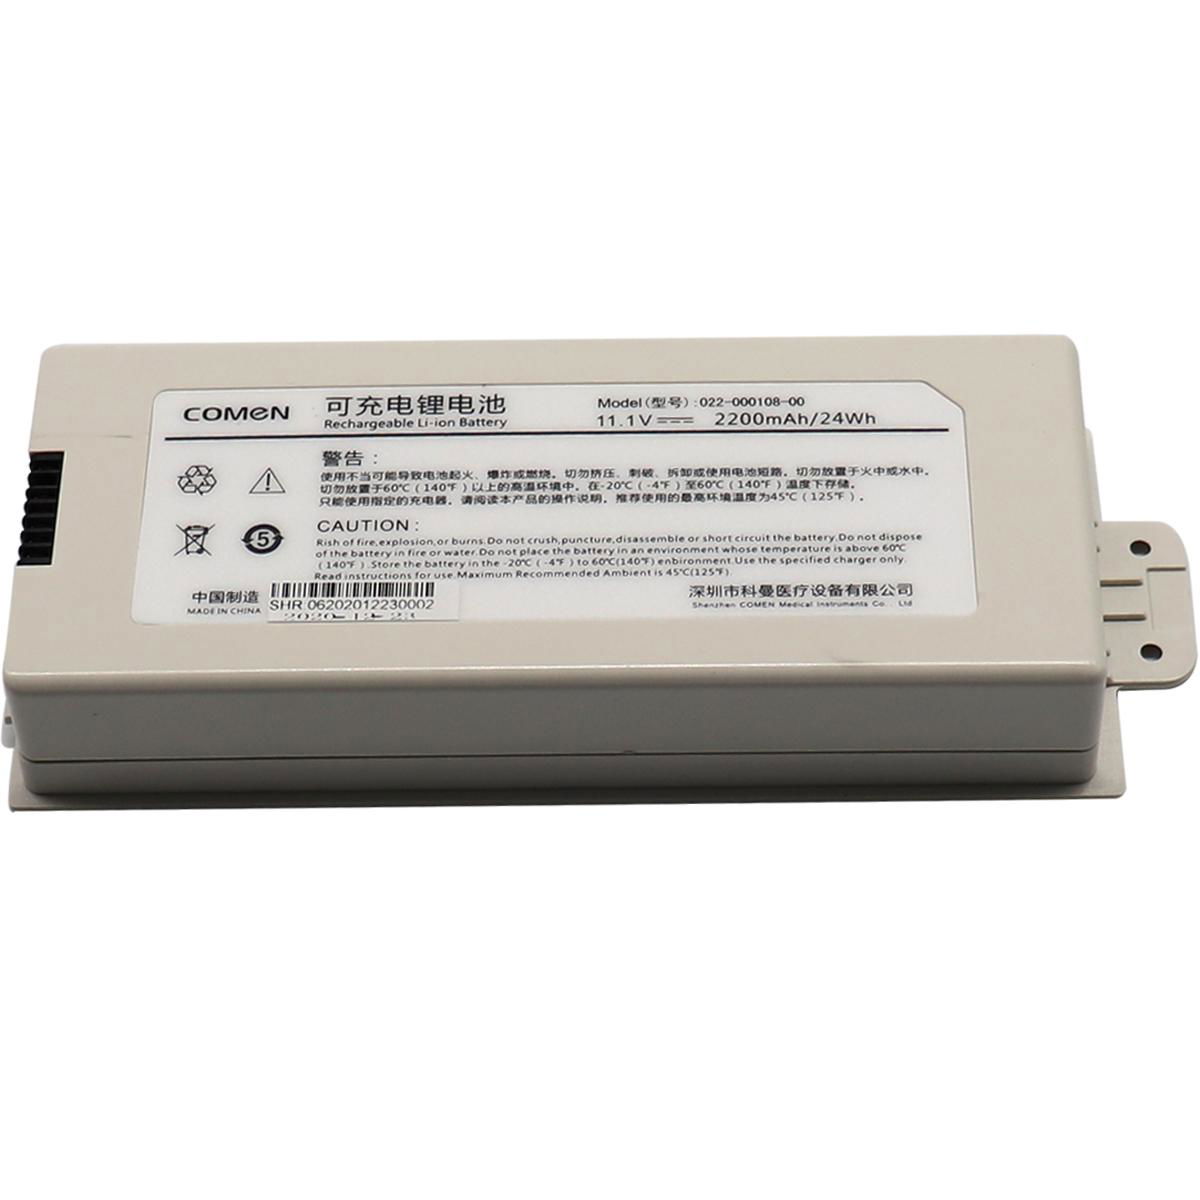 Original COMEN aed defibrillator batteries Li-ion 022-000108-00